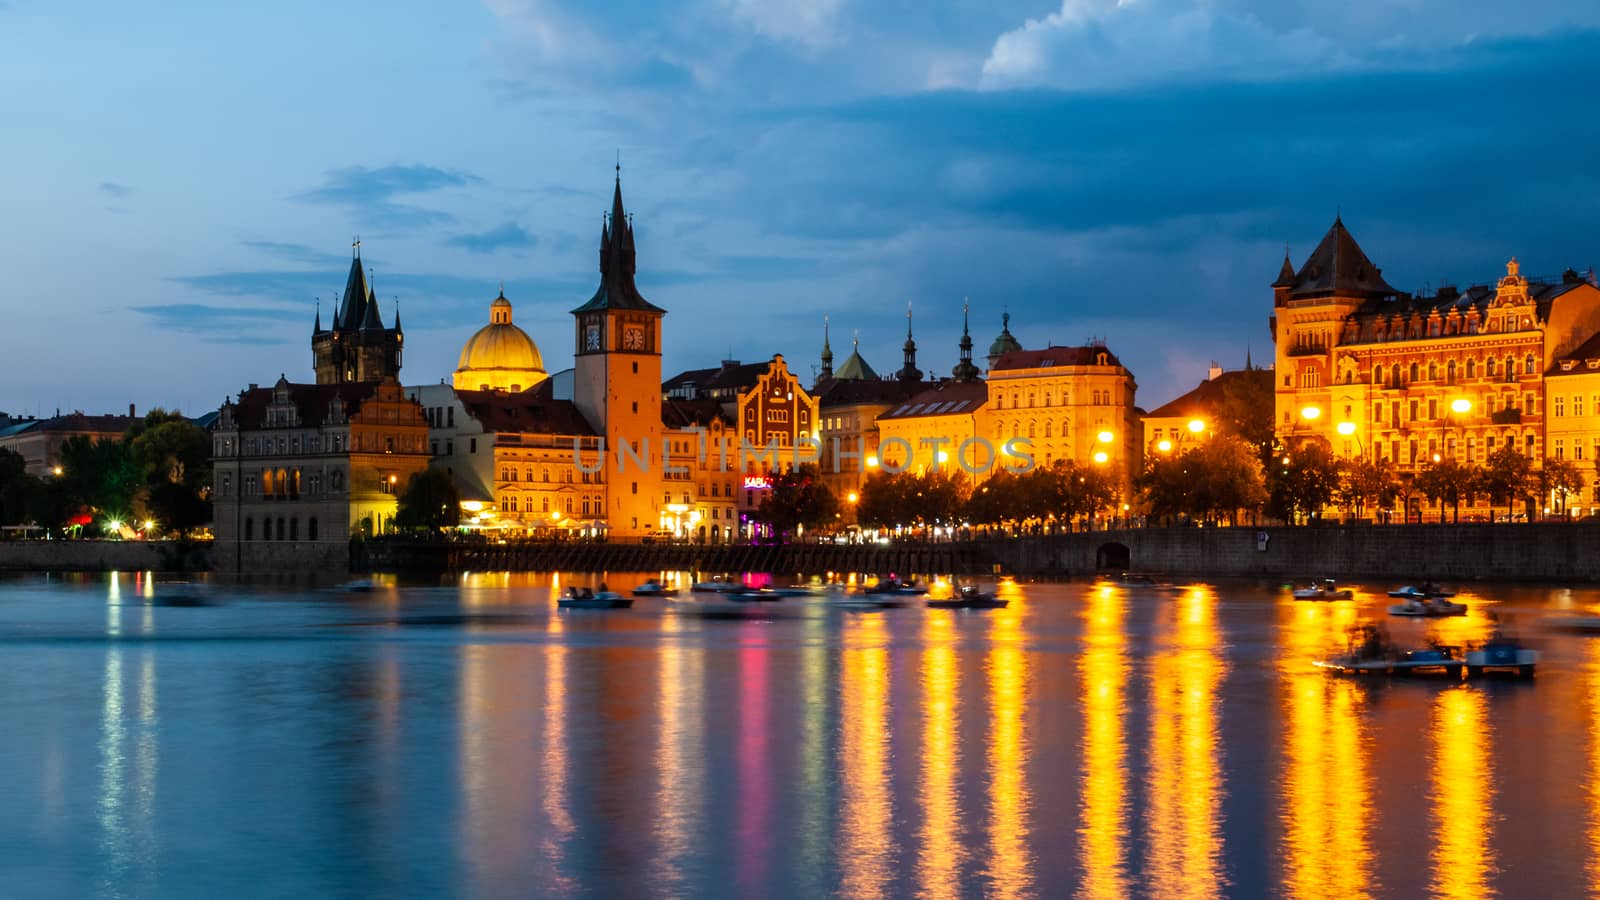 Historical buildings of Smetana Embankment reflected in the water of Vltava River on summer evening. Prague, Czech Republic.